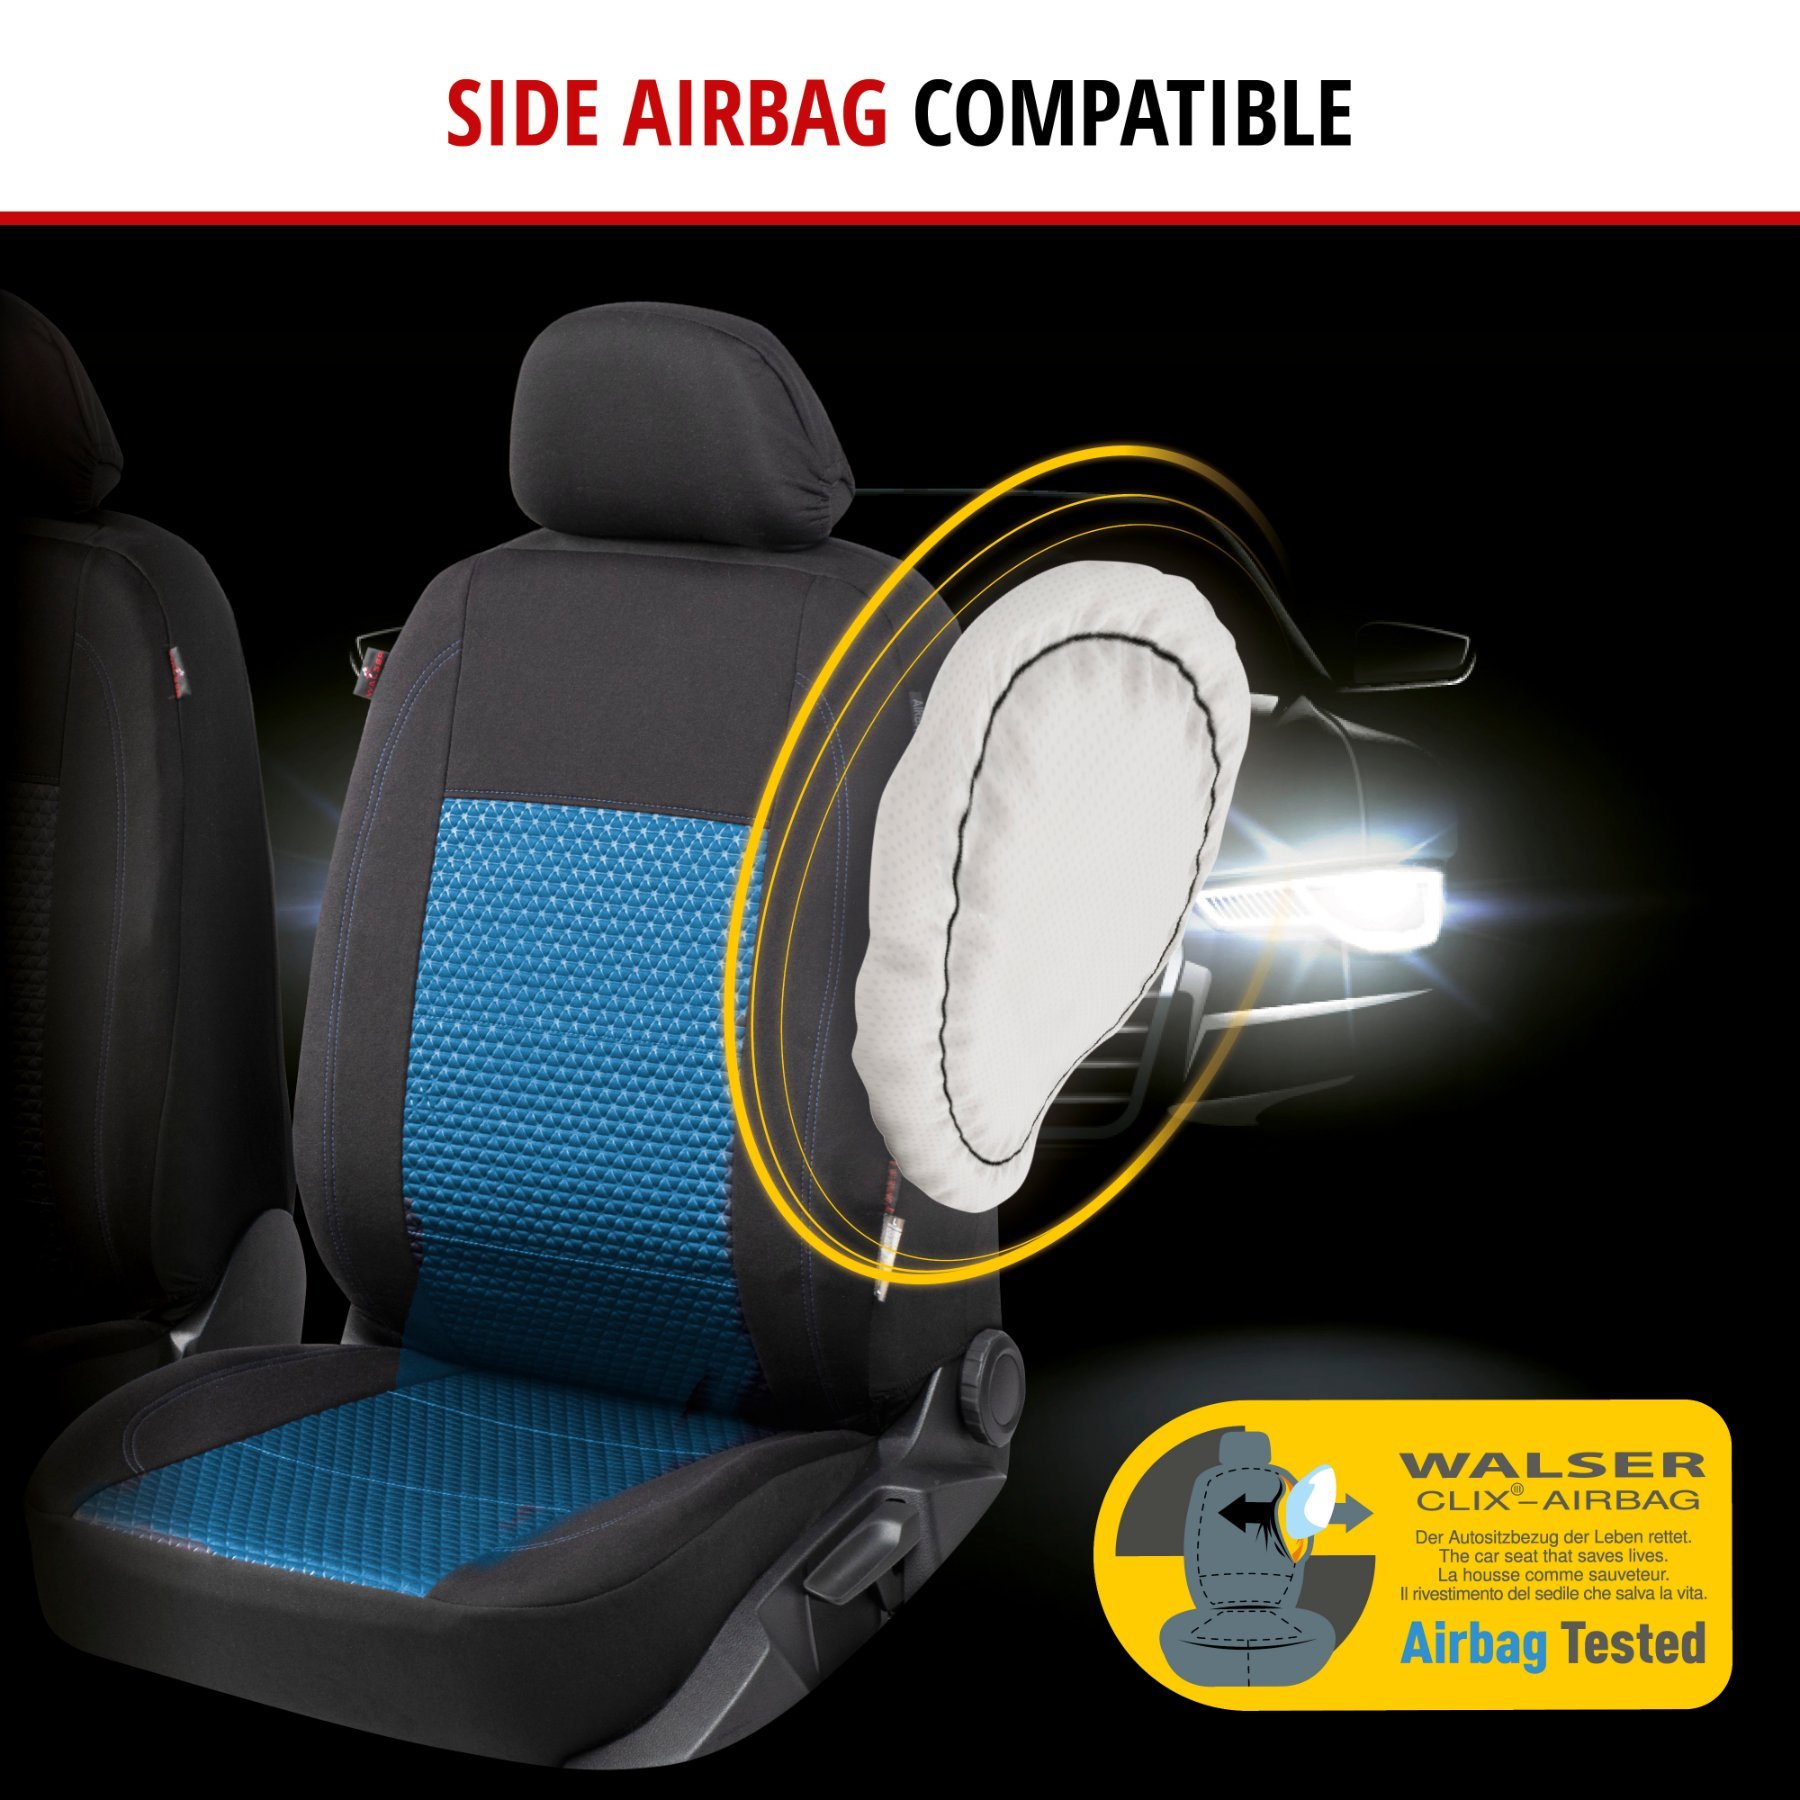 ZIPP IT Premium Car seat covers Avignon complete set with zip-system black/blue